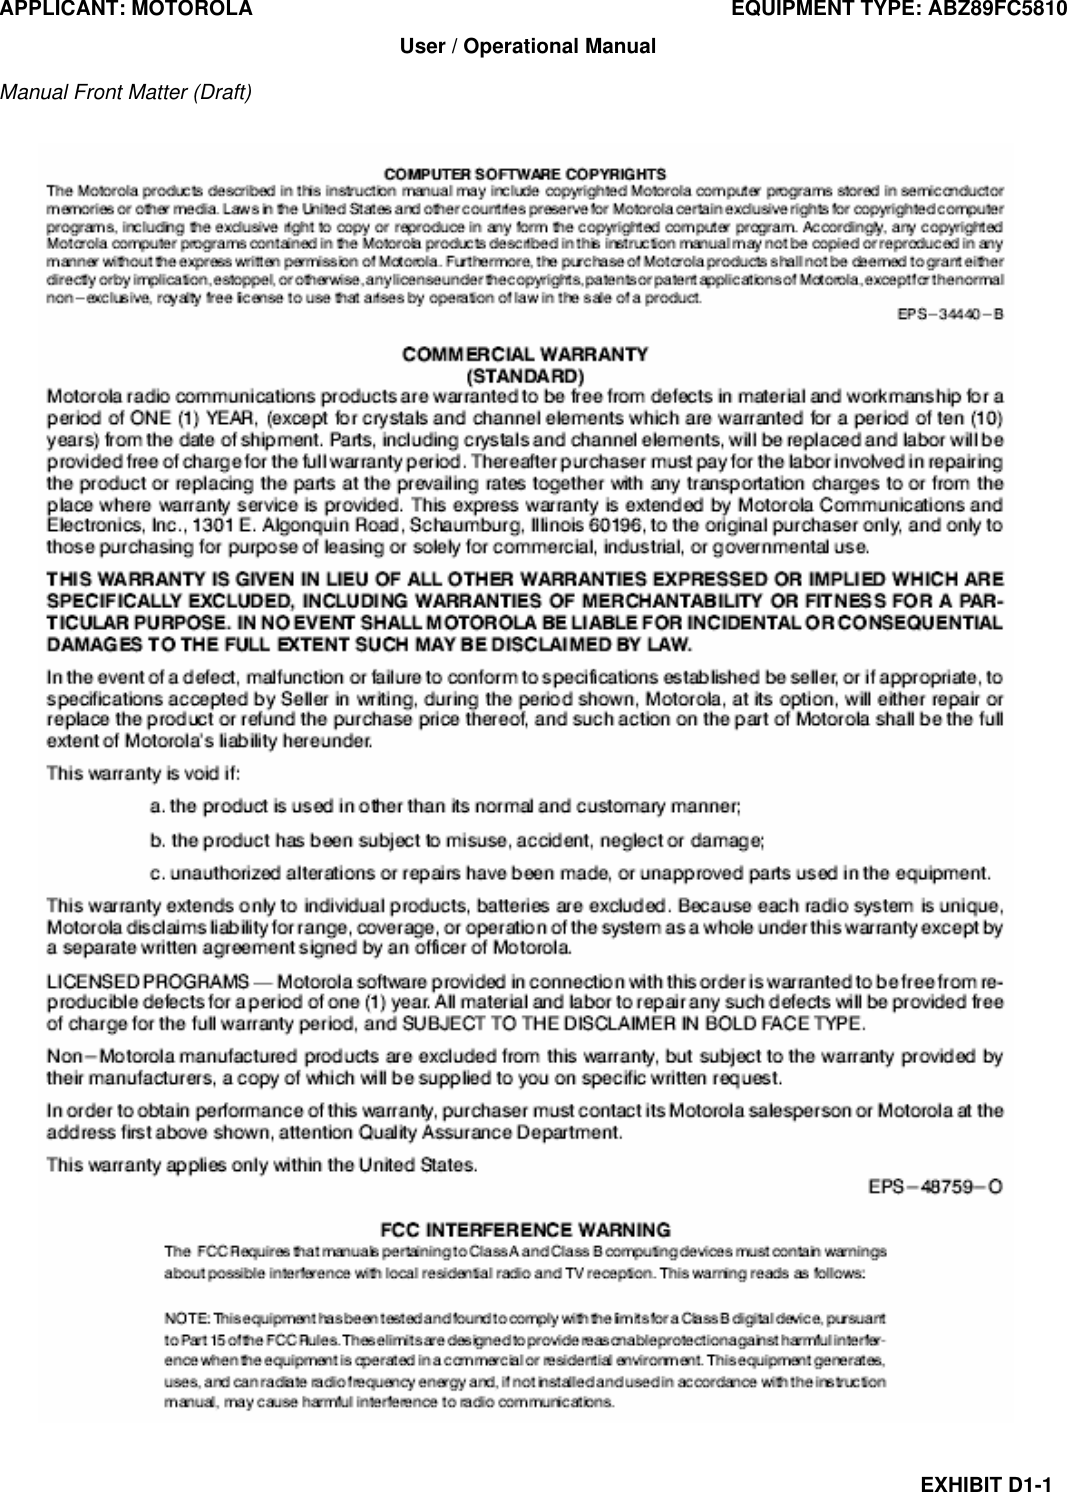 APPLICANT: MOTOROLA EQUIPMENT TYPE: ABZ89FC5810 EXHIBIT D1-1 User / Operational Manual  Manual Front Matter (Draft) 